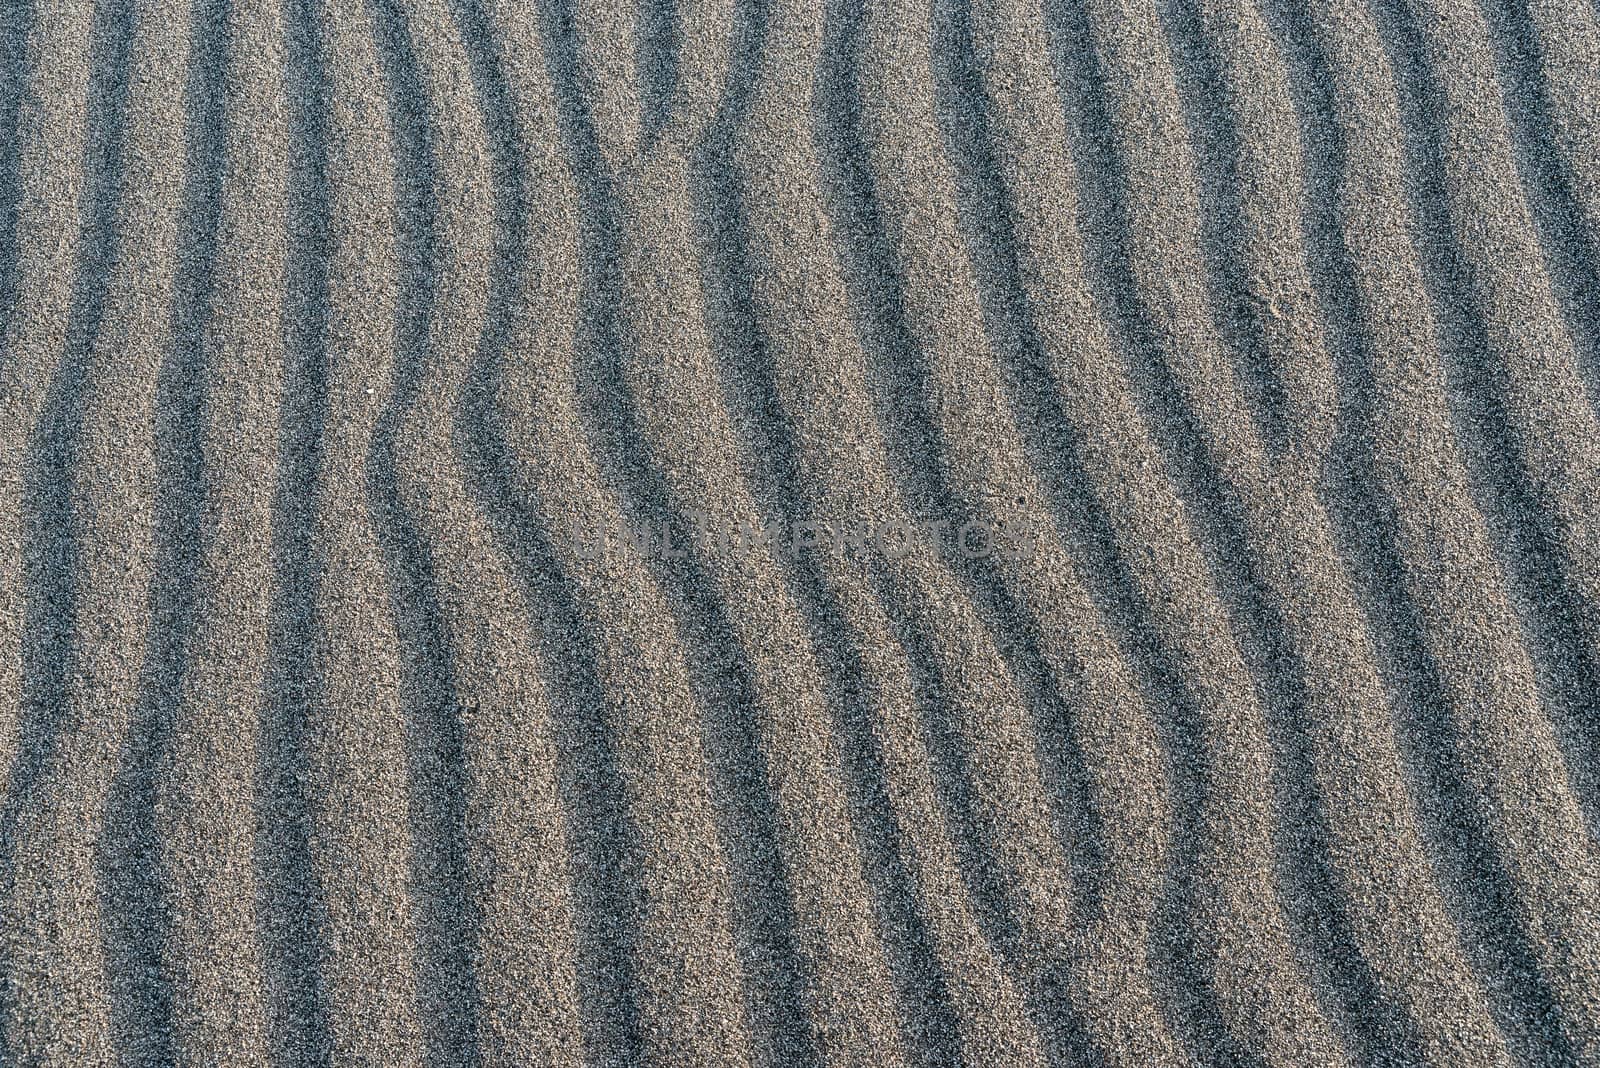 Gray Bruneau Sand by pmilota